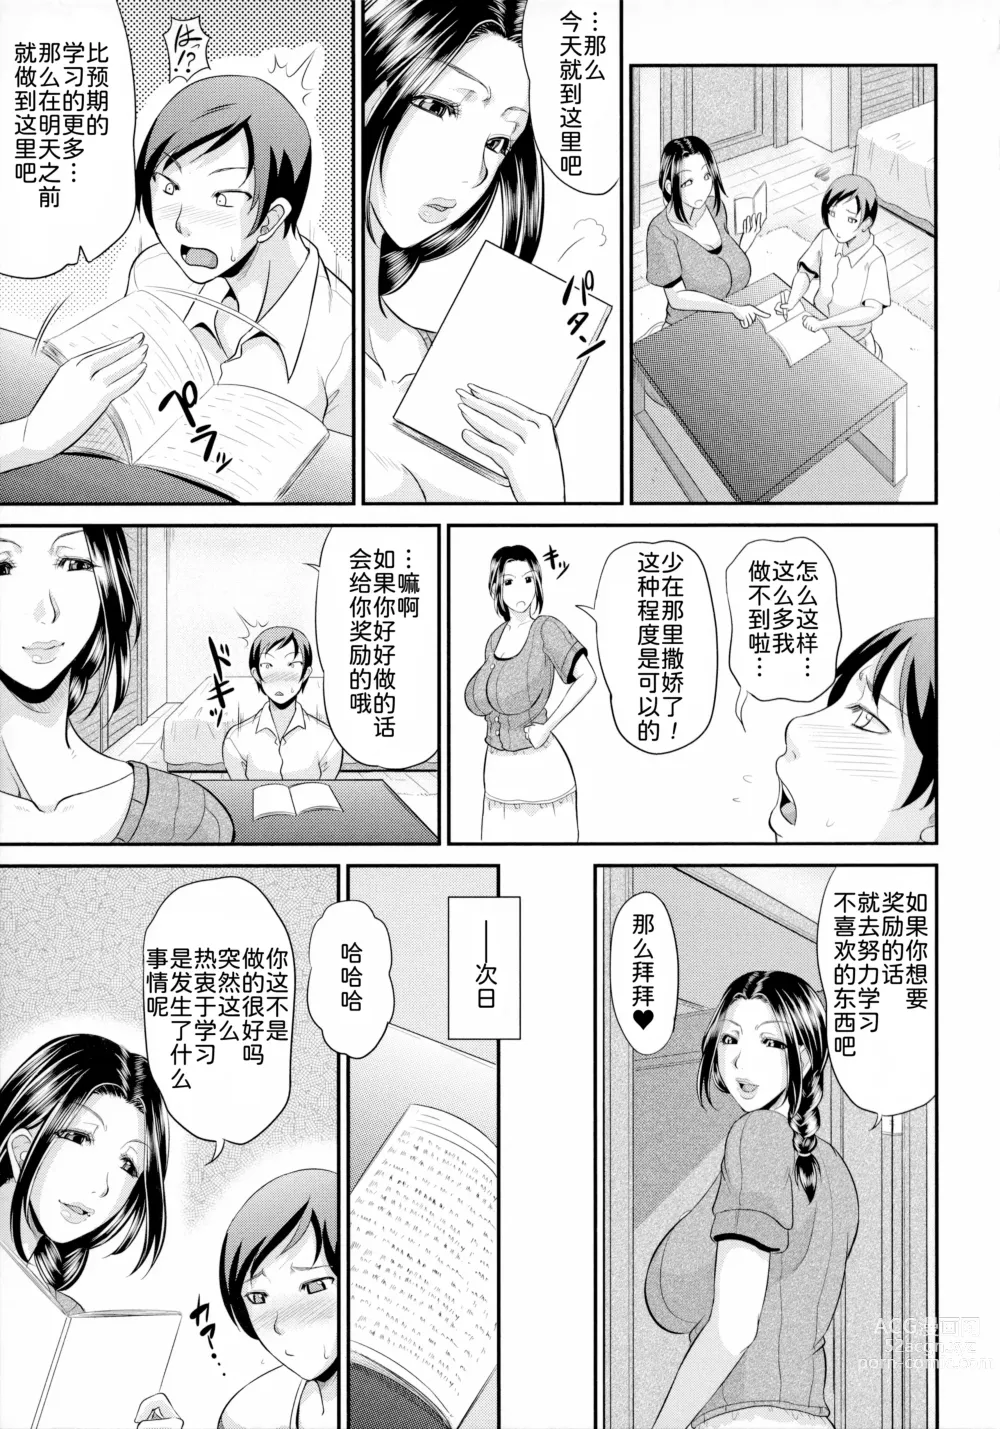 Page 184 of manga Uruwashi no Wife